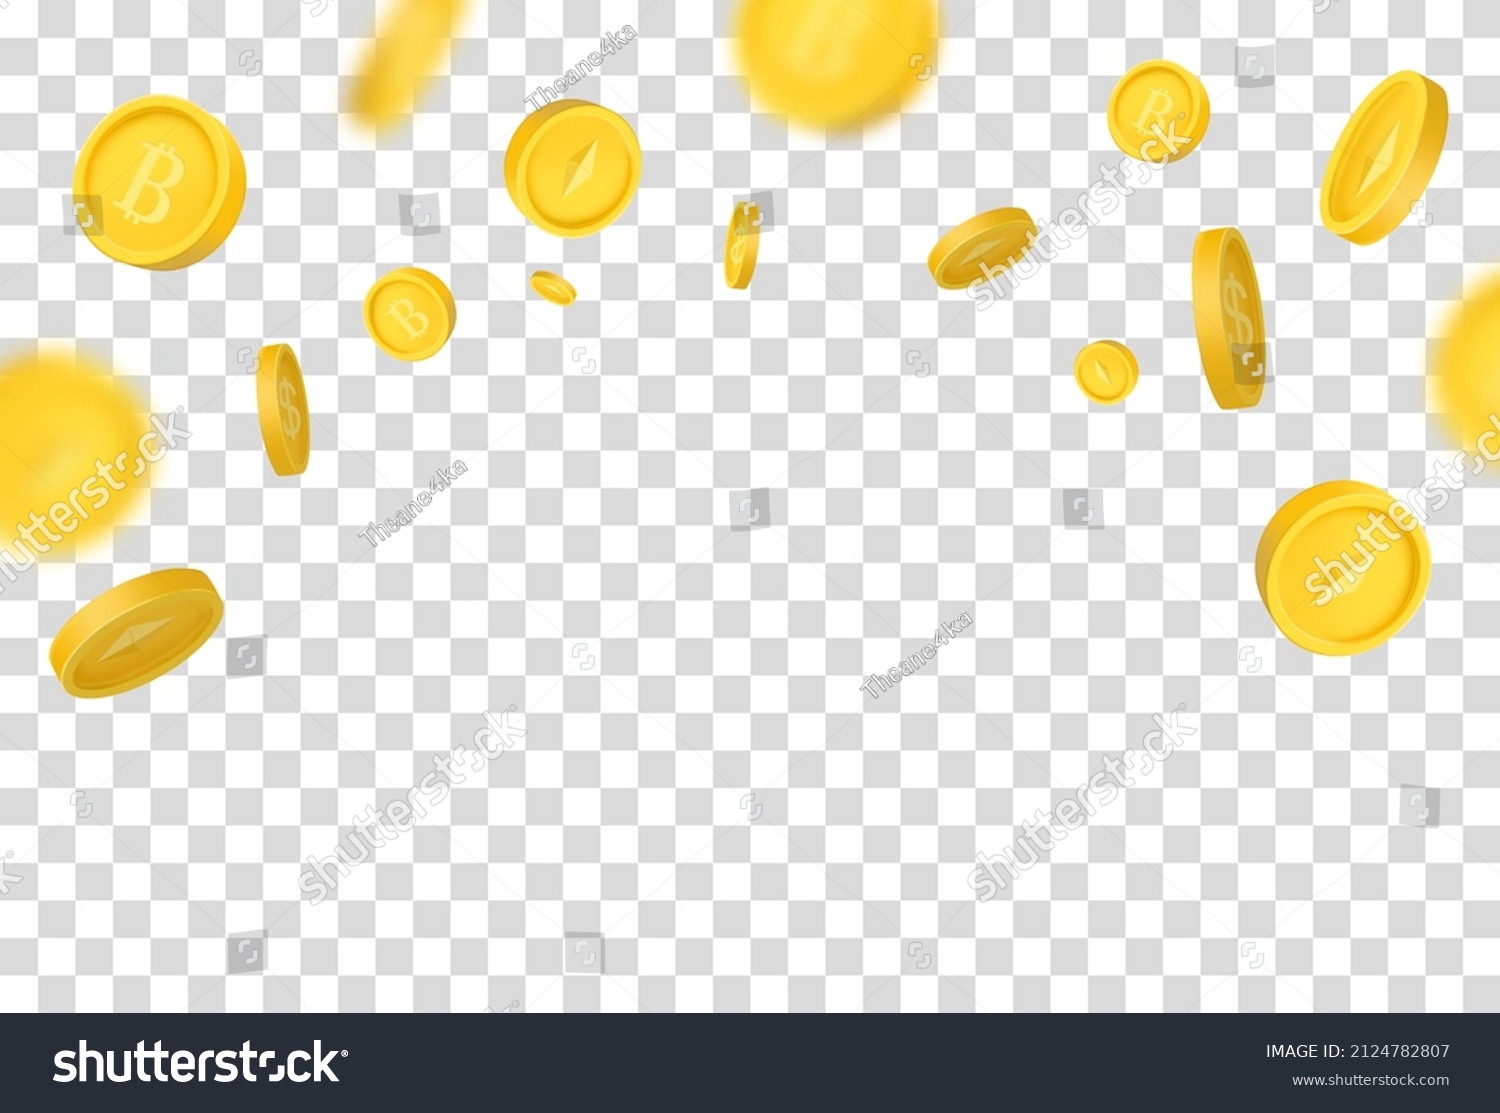 SVG of Bitcoin Ethereum cryptocurrency symbols. Rain of 3d Golden coins, Digital money splash on transparent background. Falling or flying money, digital currency payment, mining, finance concept. svg